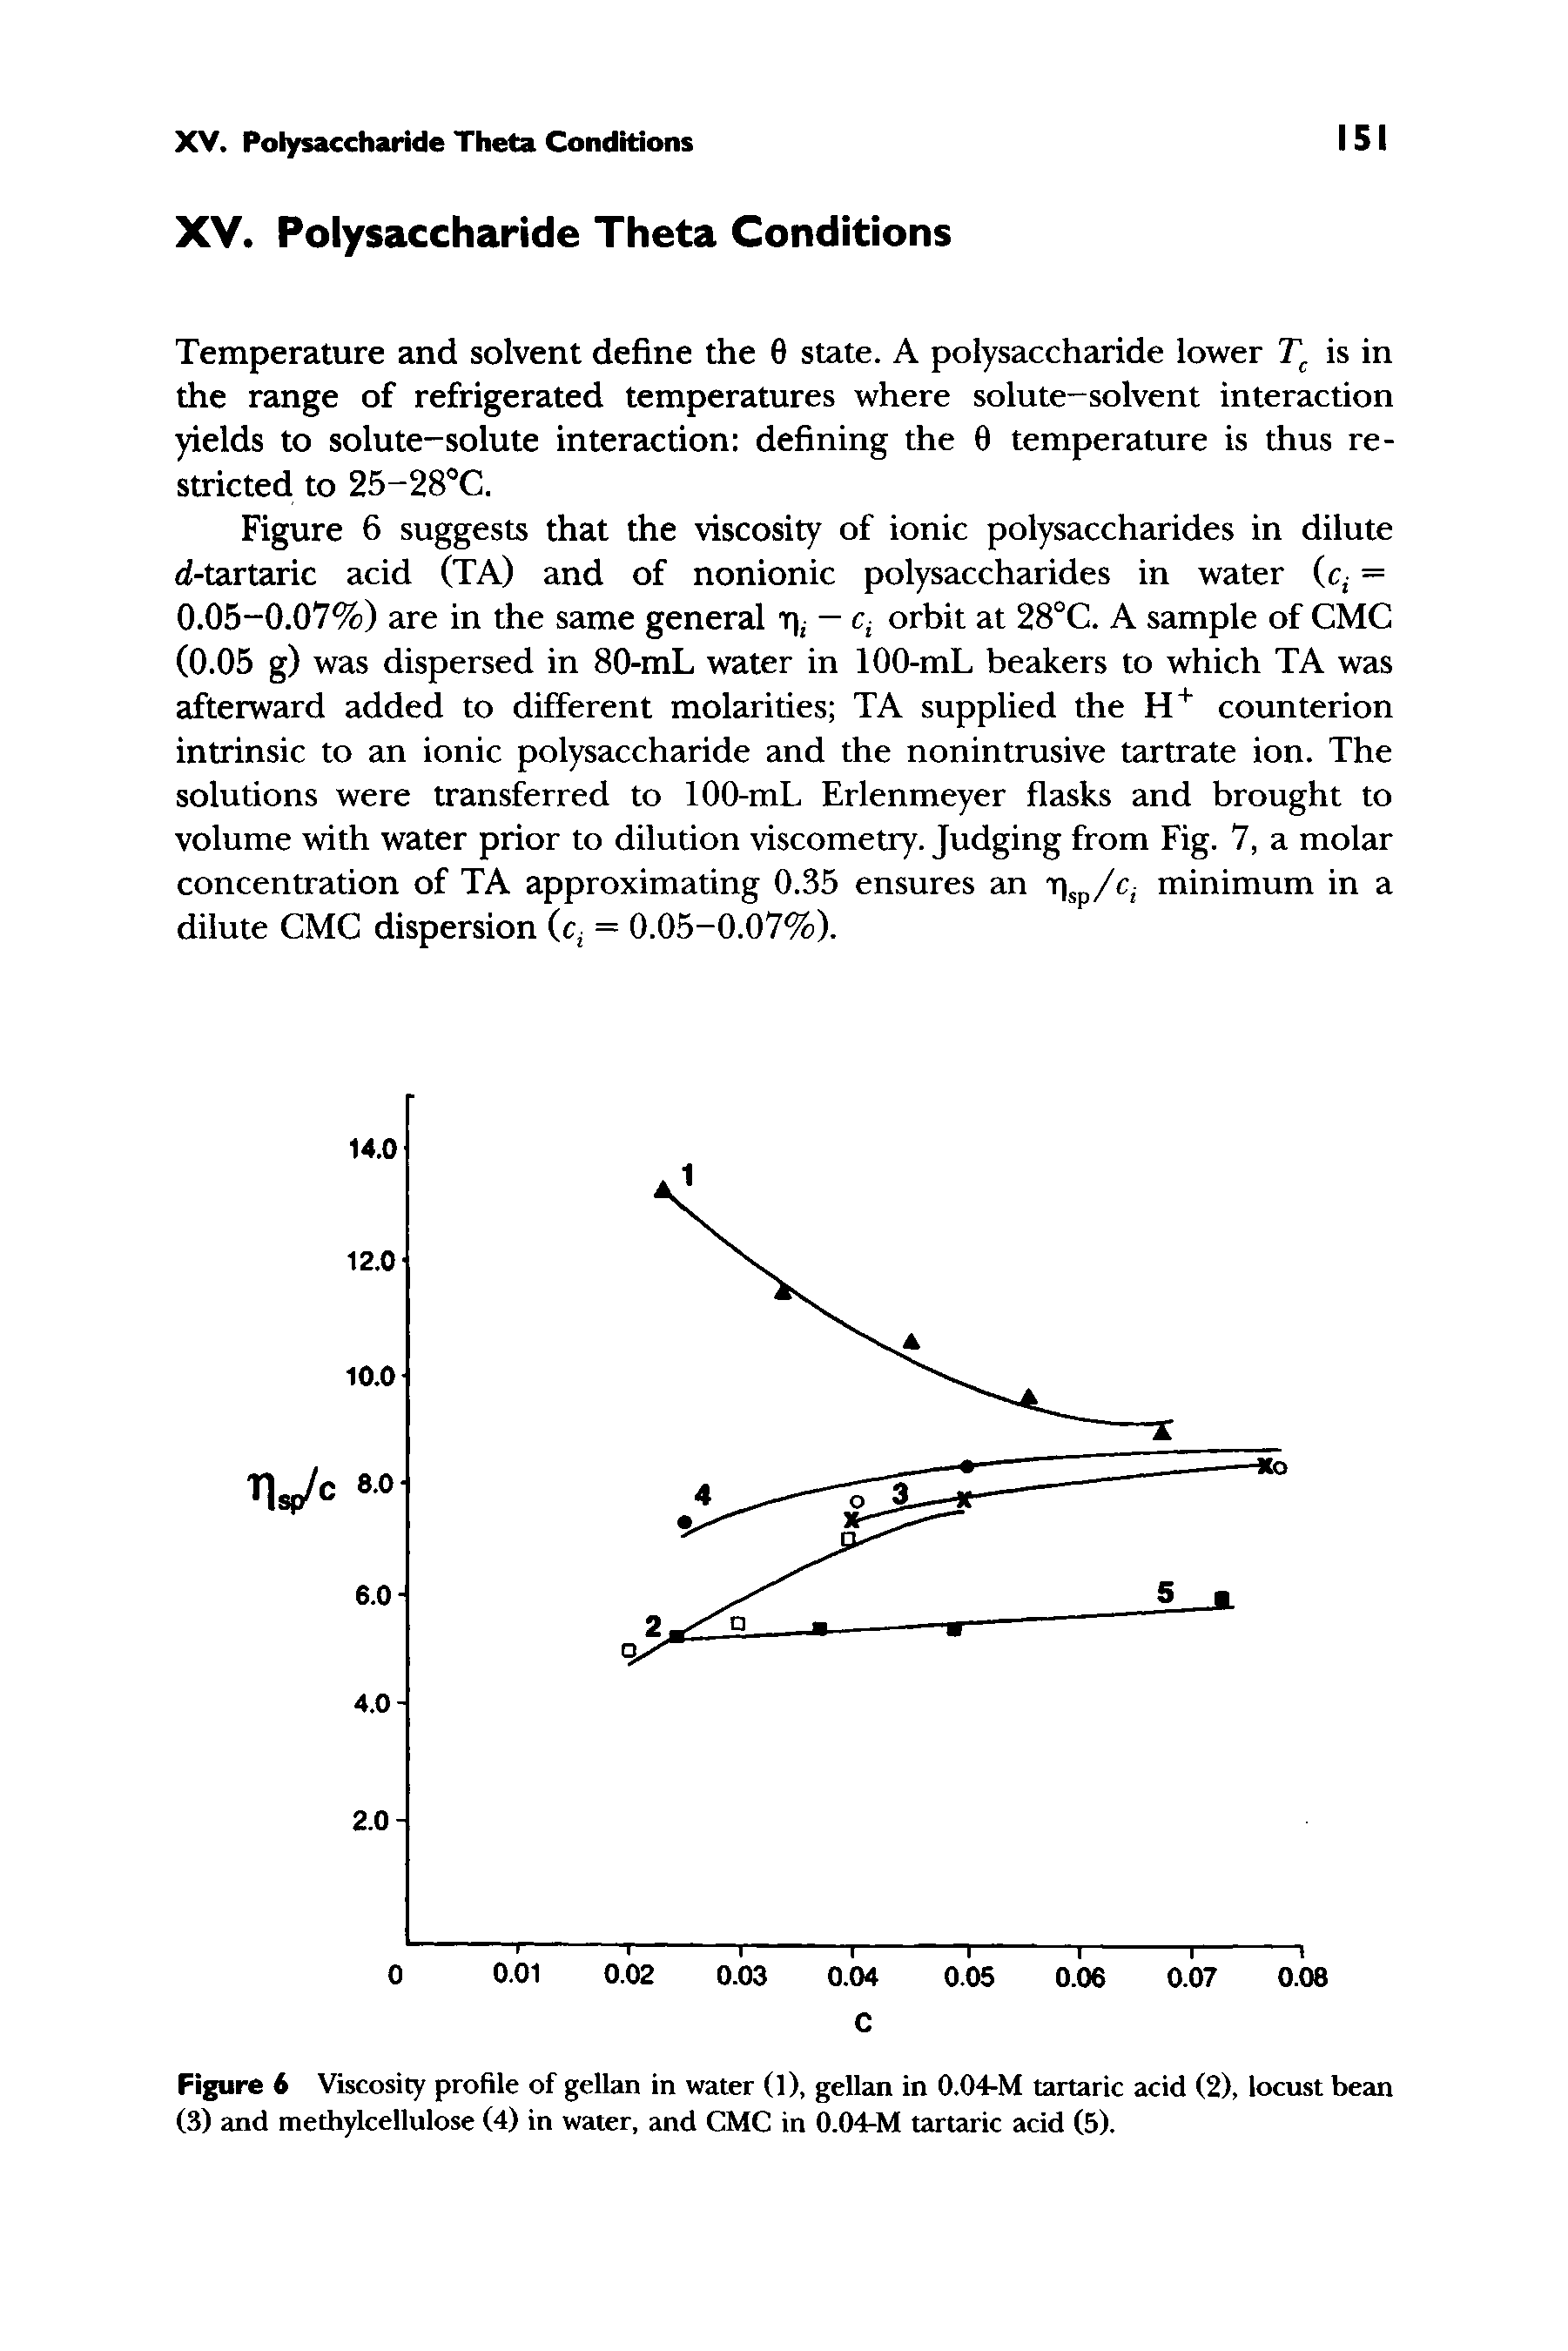 Figure 6 Viscosity profile of gellan in water (1), gellan in 0.04-M tartaric acid (2), locust bean (3) and methylcellulose (4) in water, and CMC in 0.04-M tartaric acid (5).